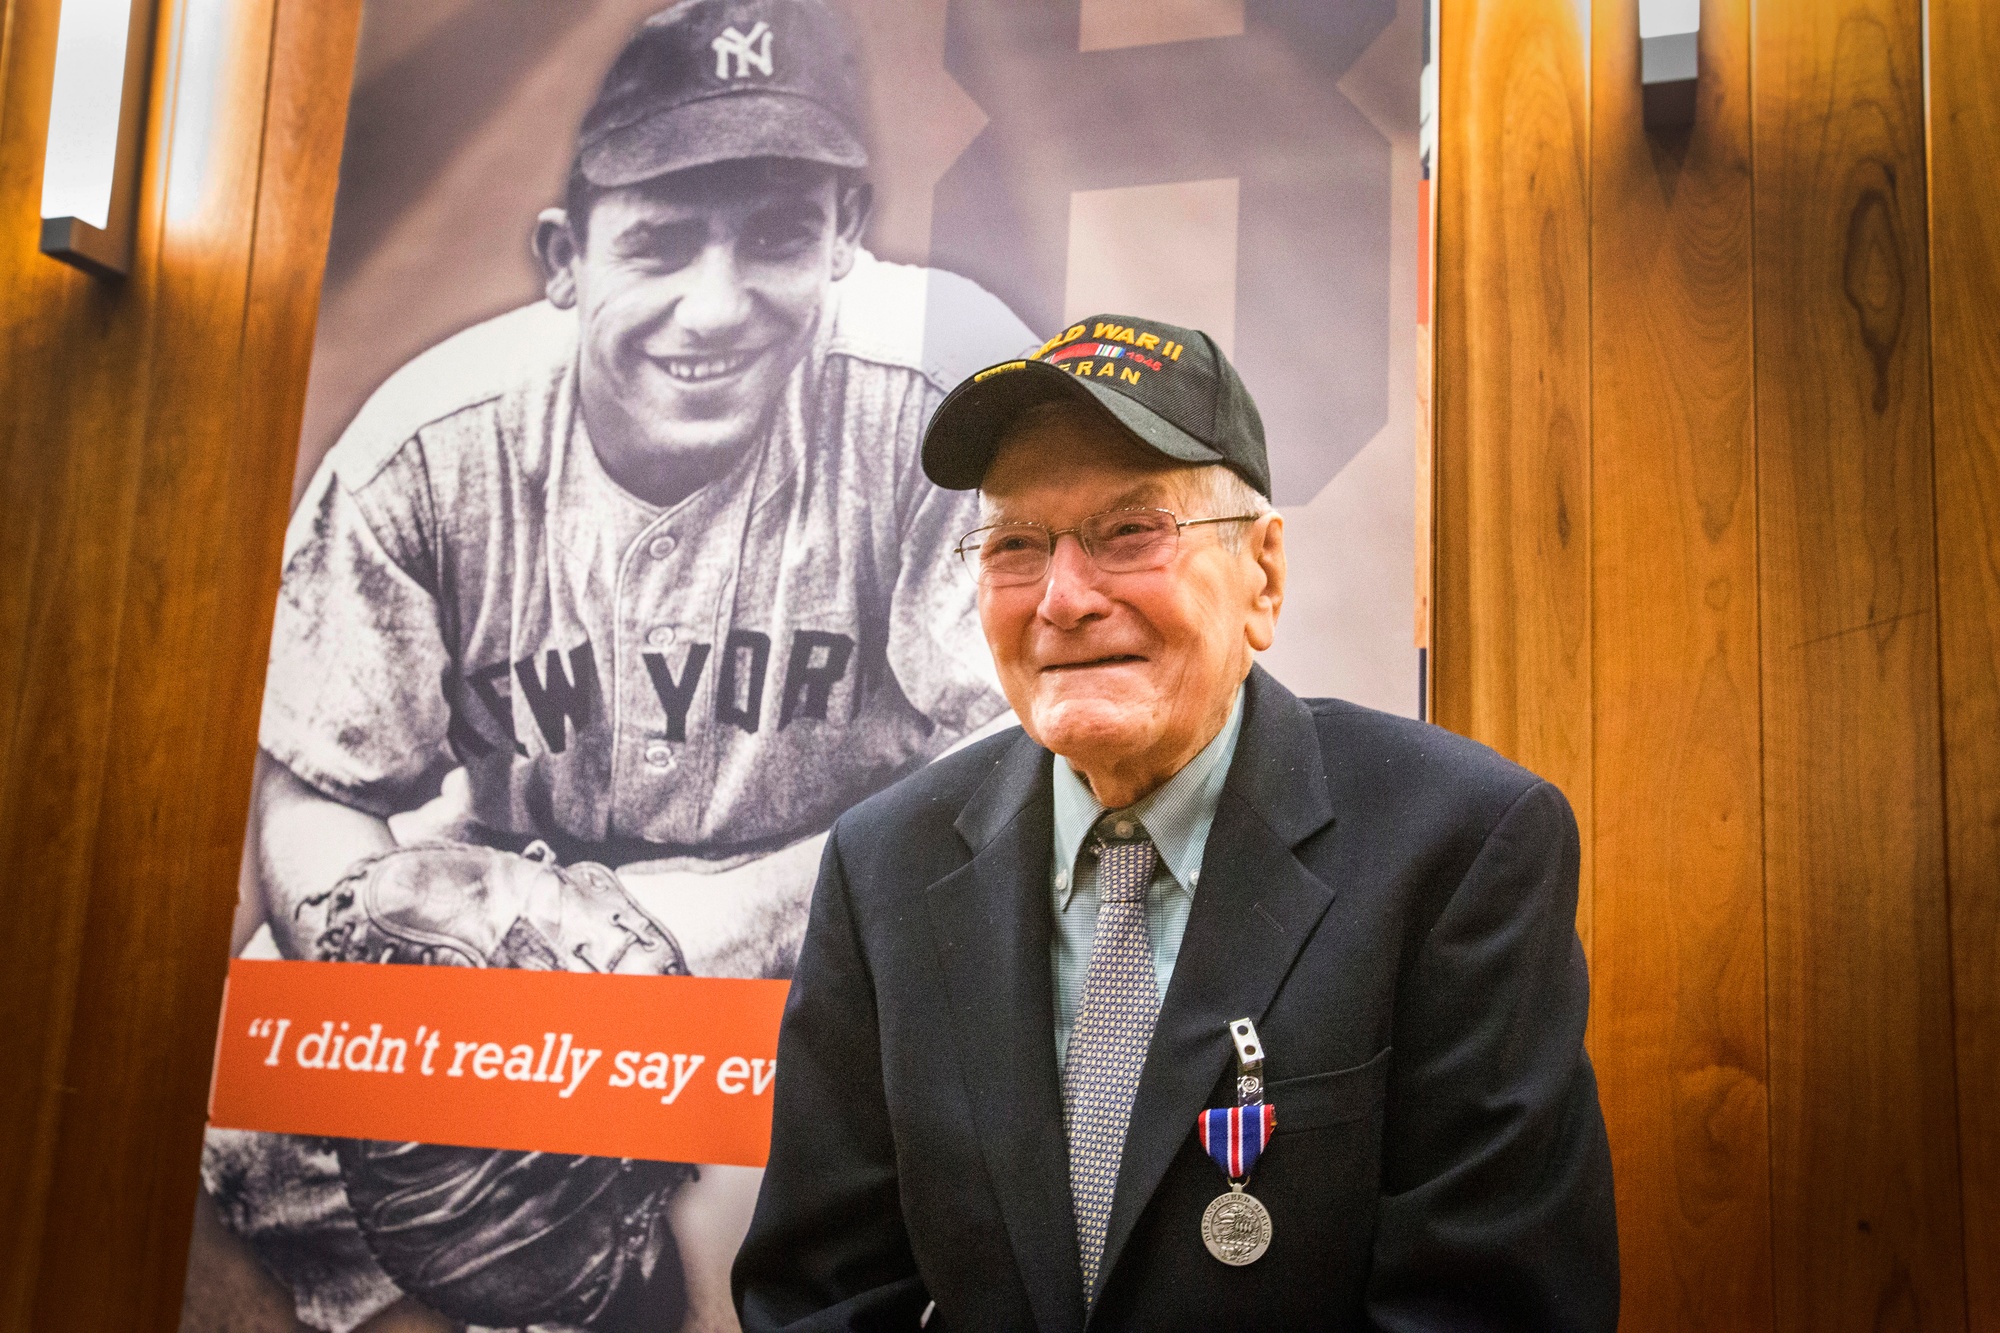 DVIDS - Images - Veterans honored at Yogi Berra Museum & Learning Center